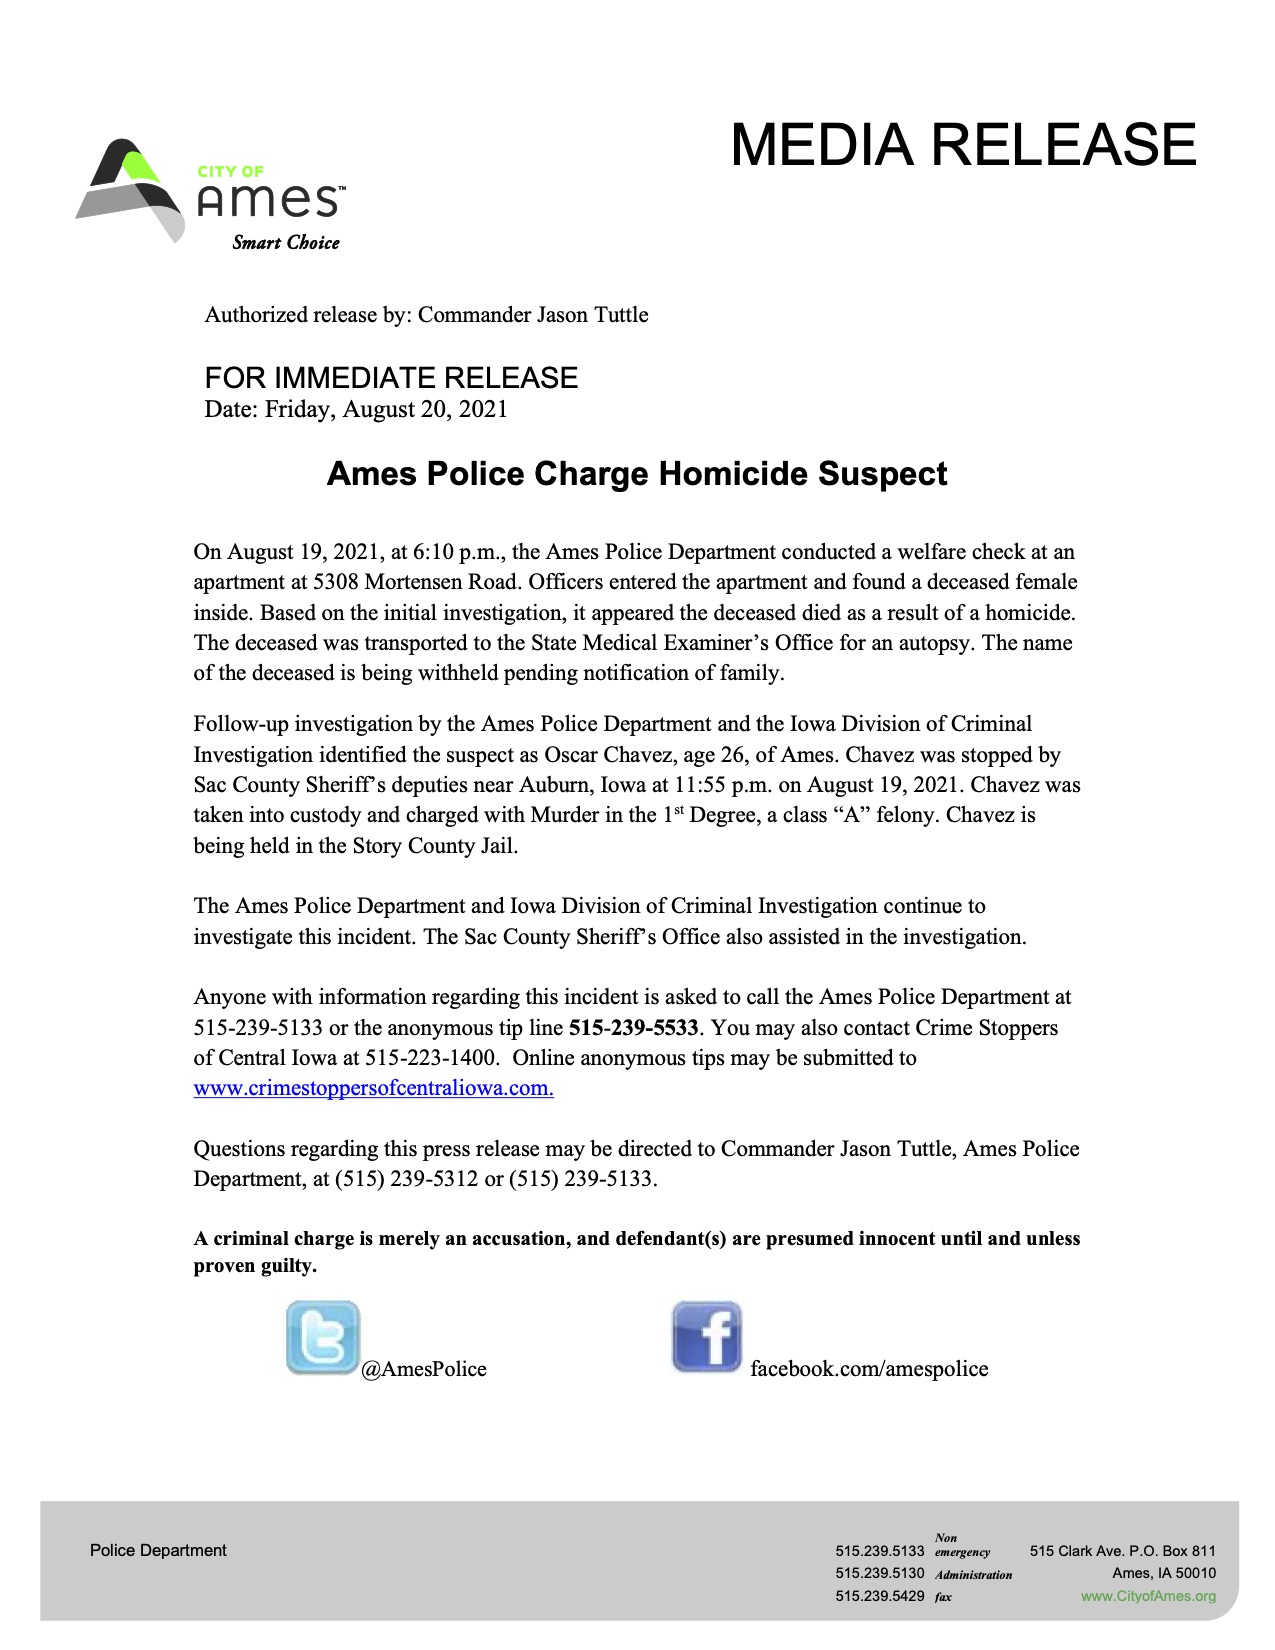 Ames media release